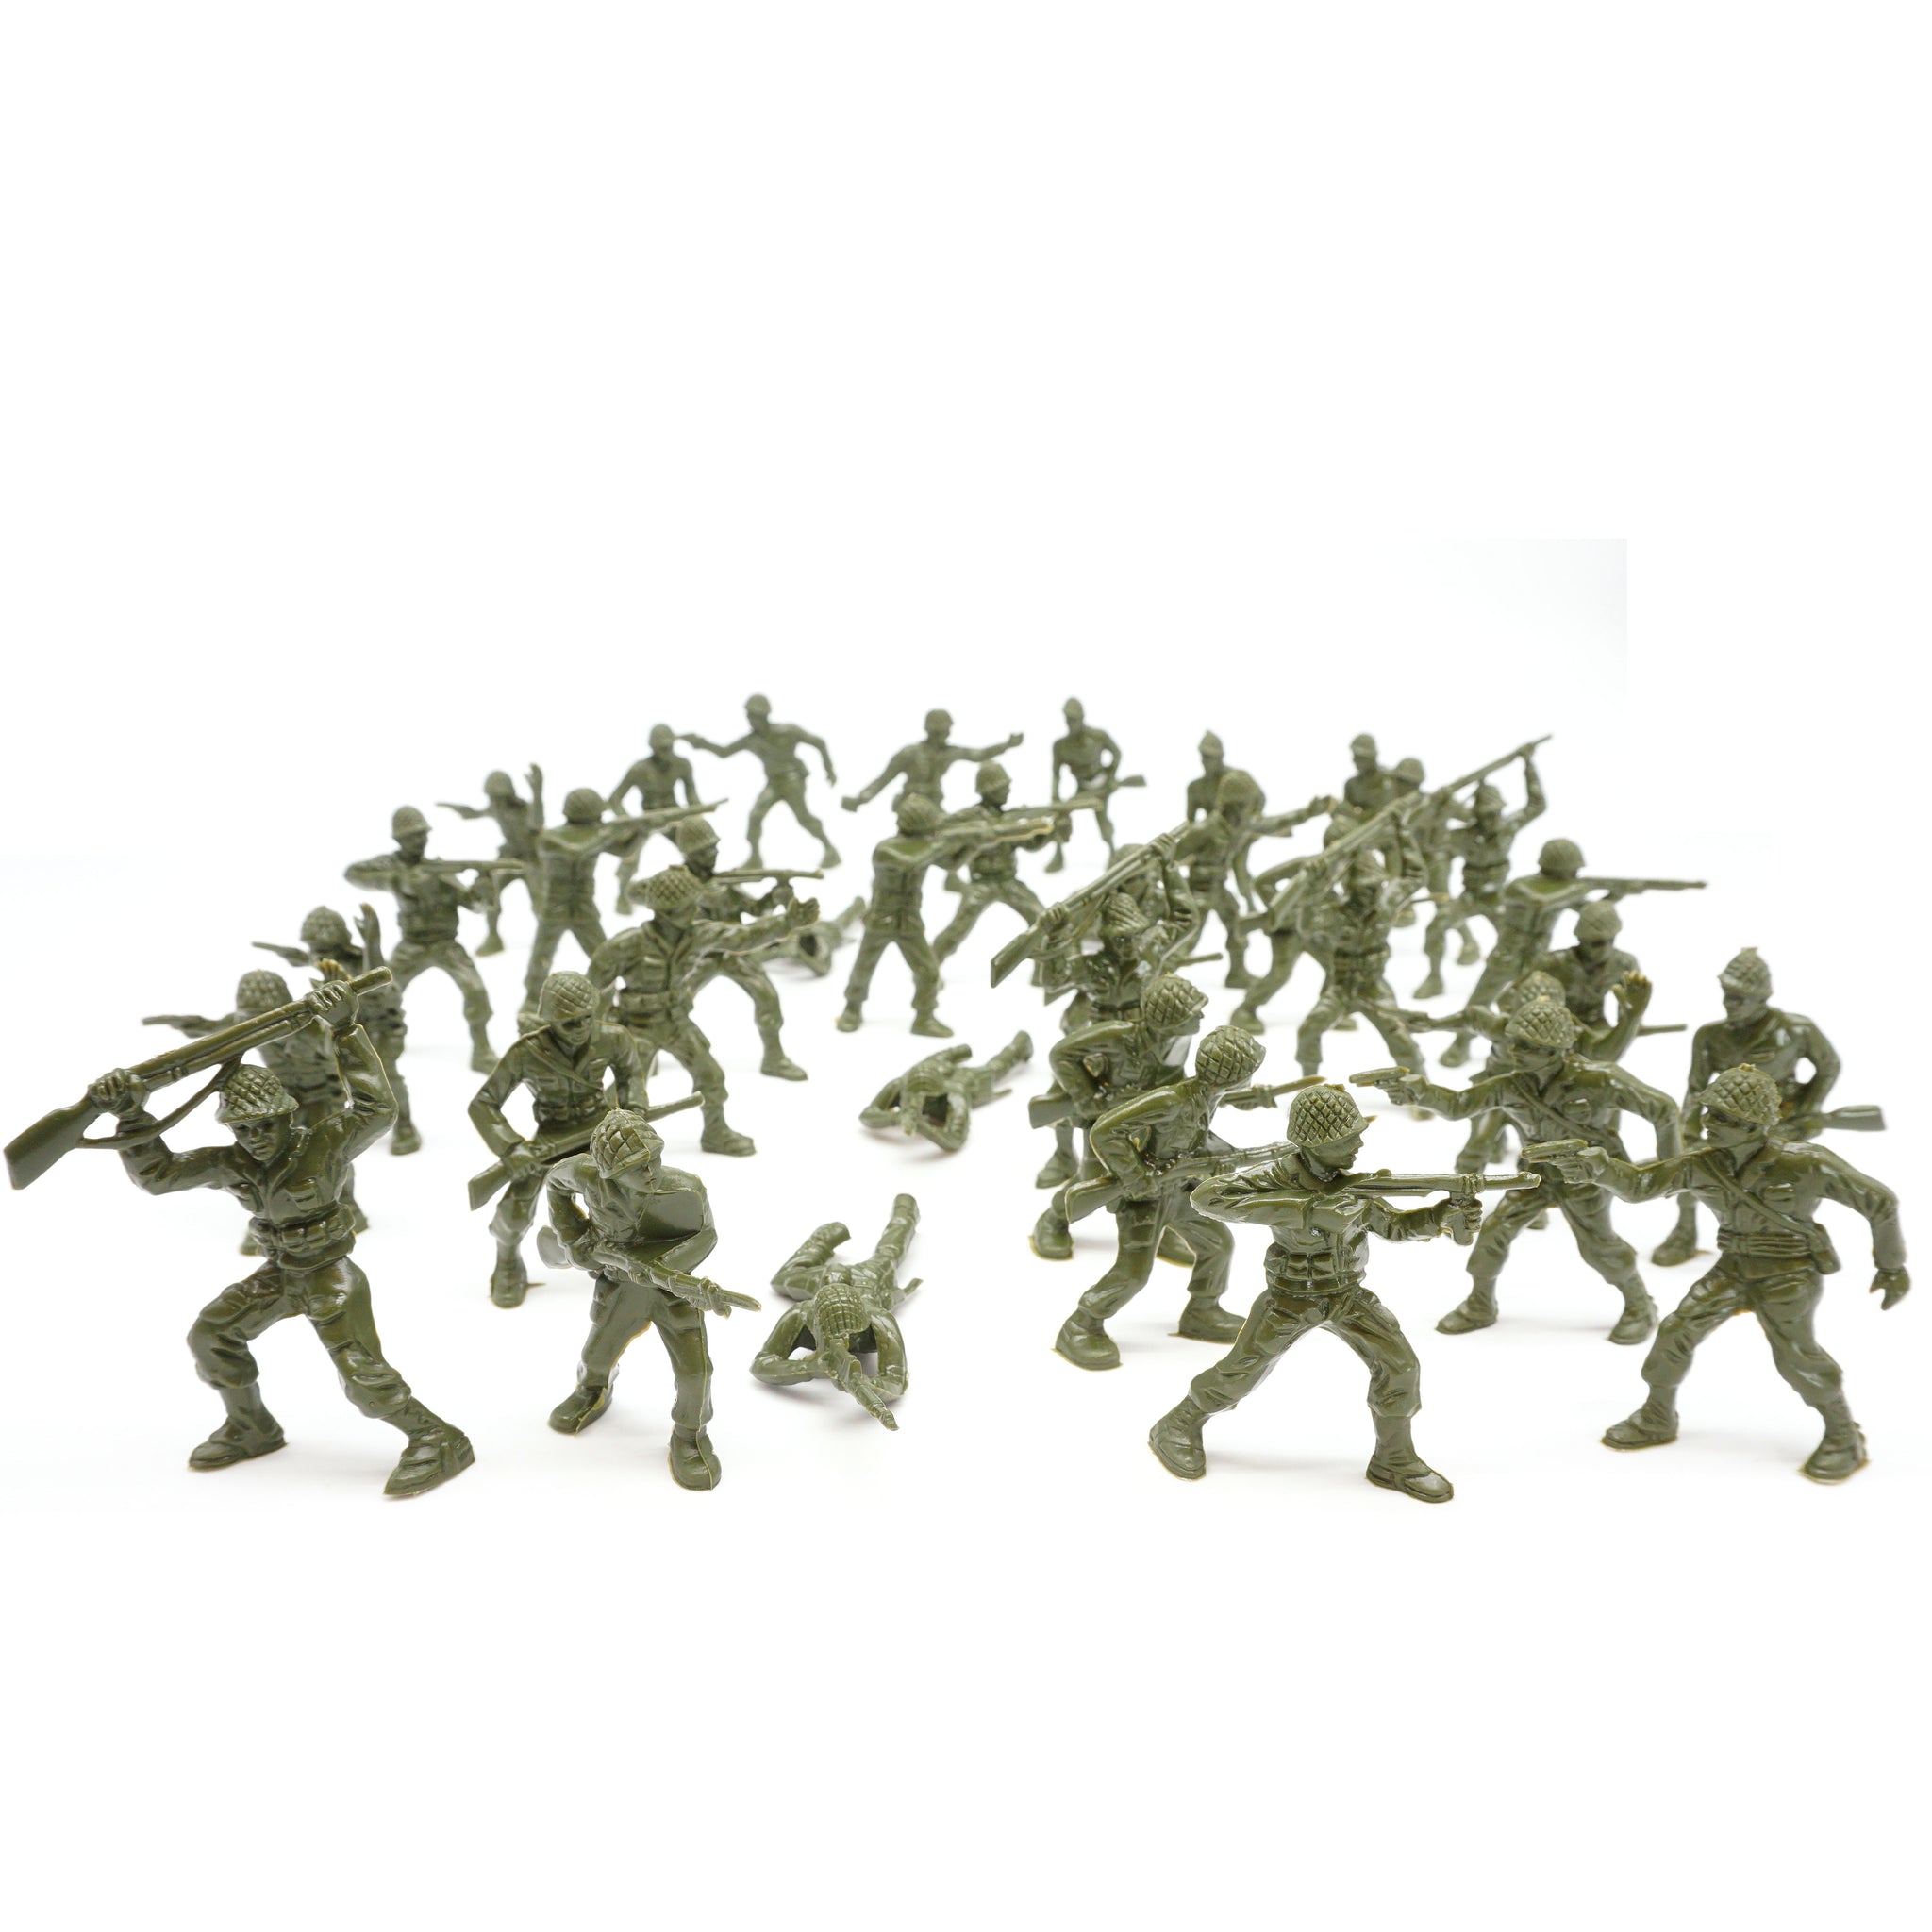 U.S. Soldiers: 1960's Plastic Army Men Figures